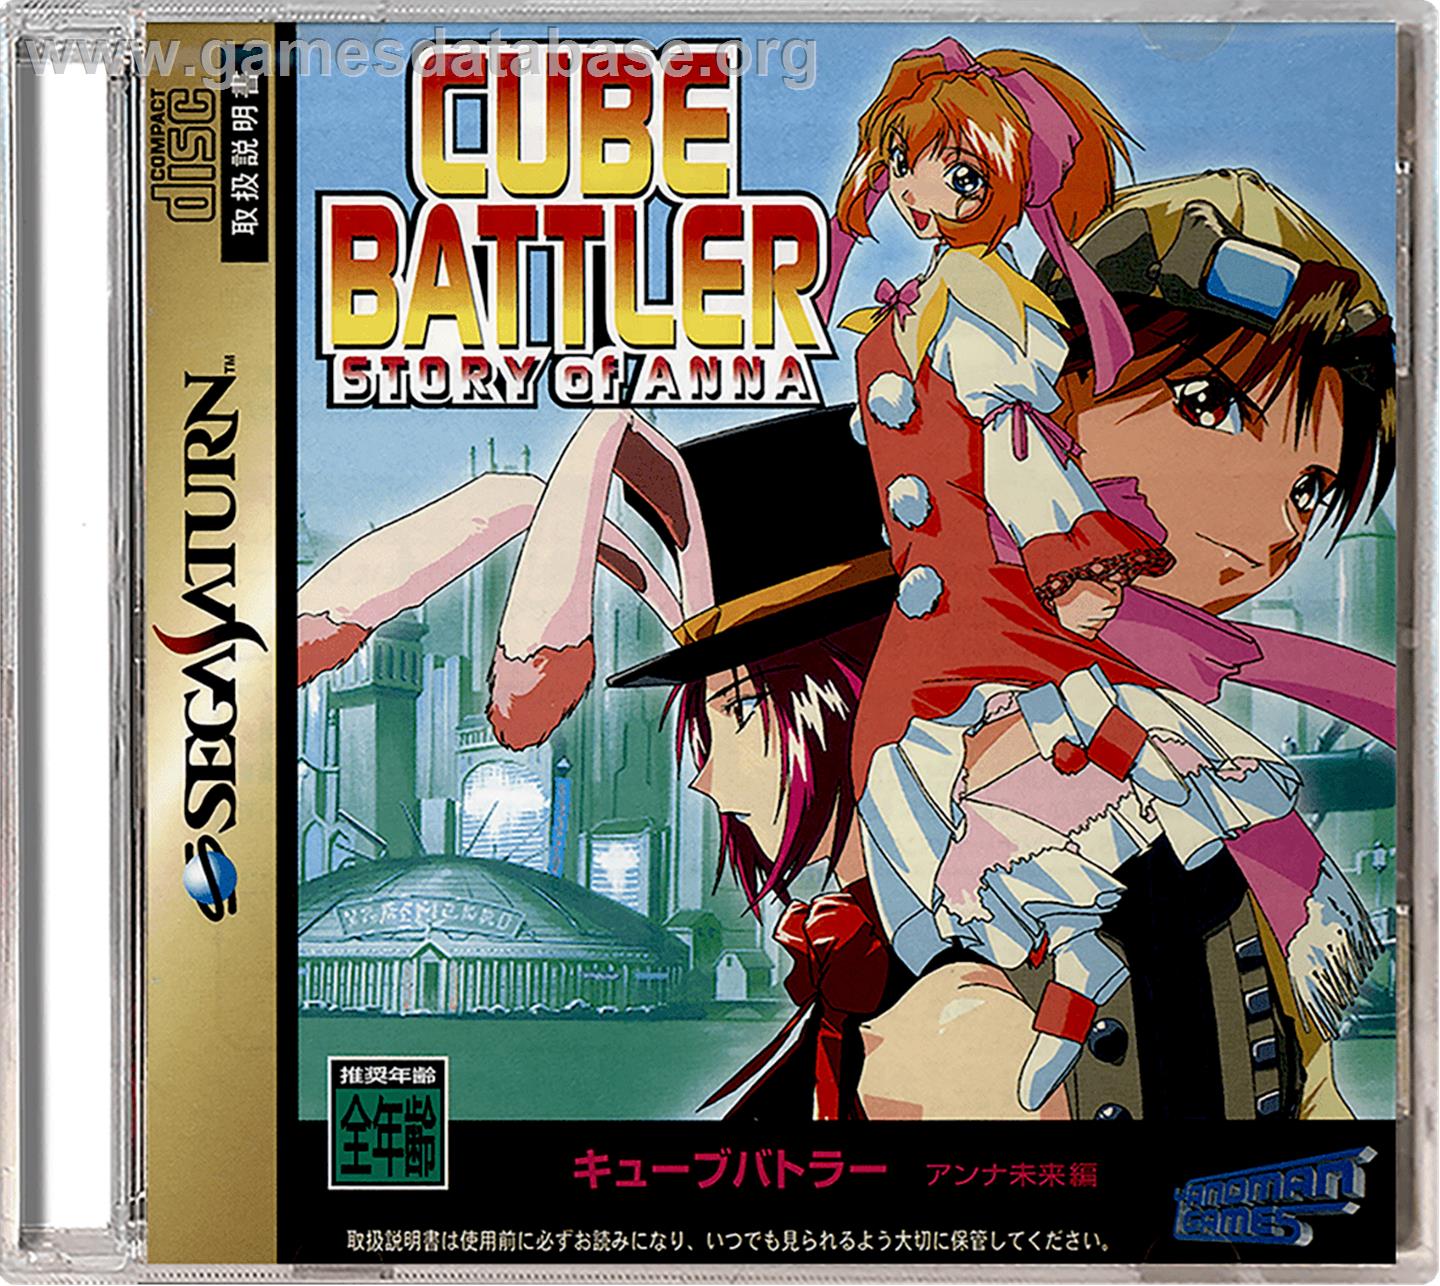 Cube Battler: Story of Anna - Sega Saturn - Artwork - Box